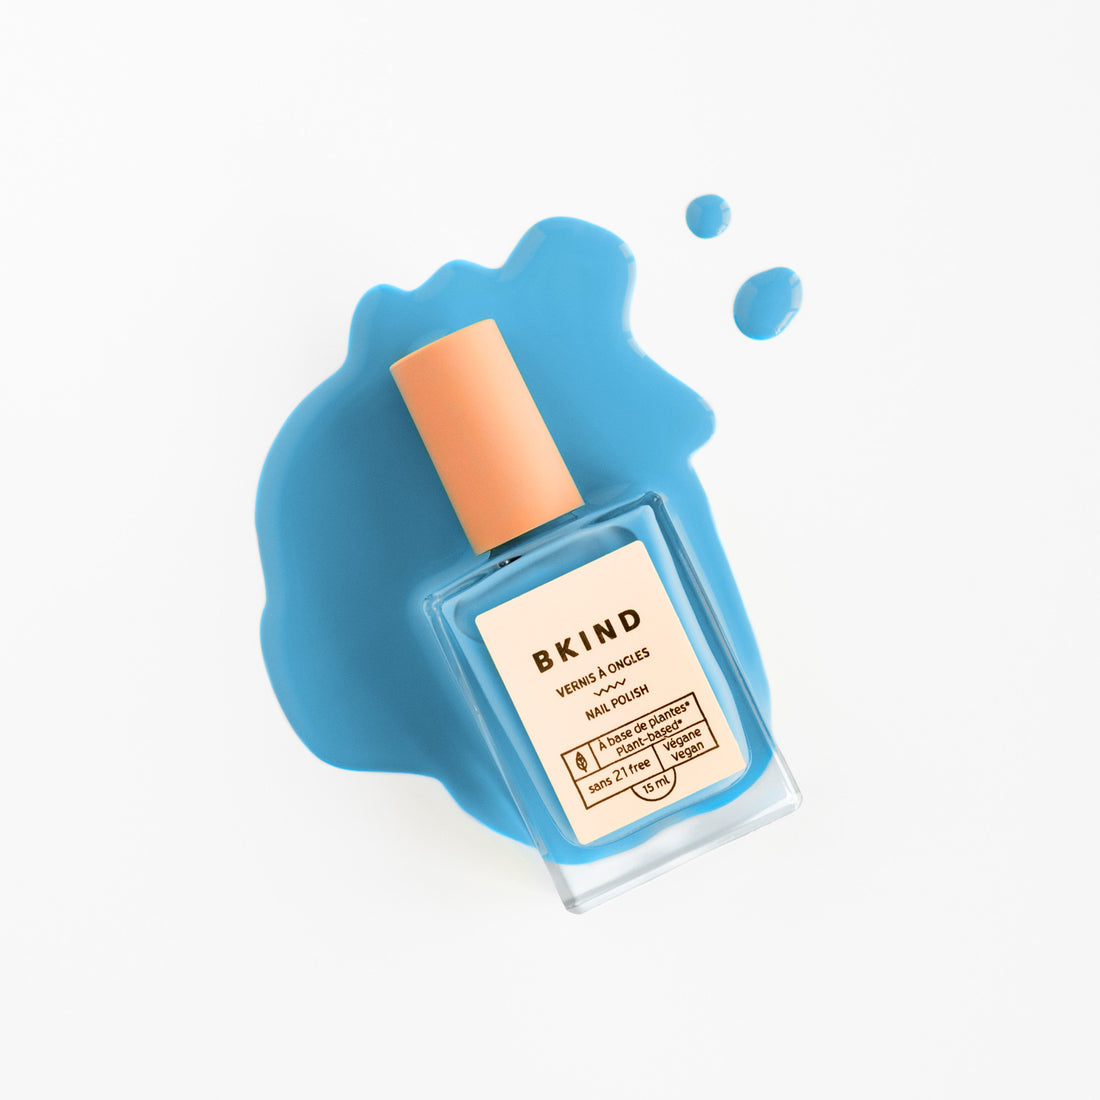 Blue Lagoon BKIND nail polish blue vegan 21-free 77% plant-based